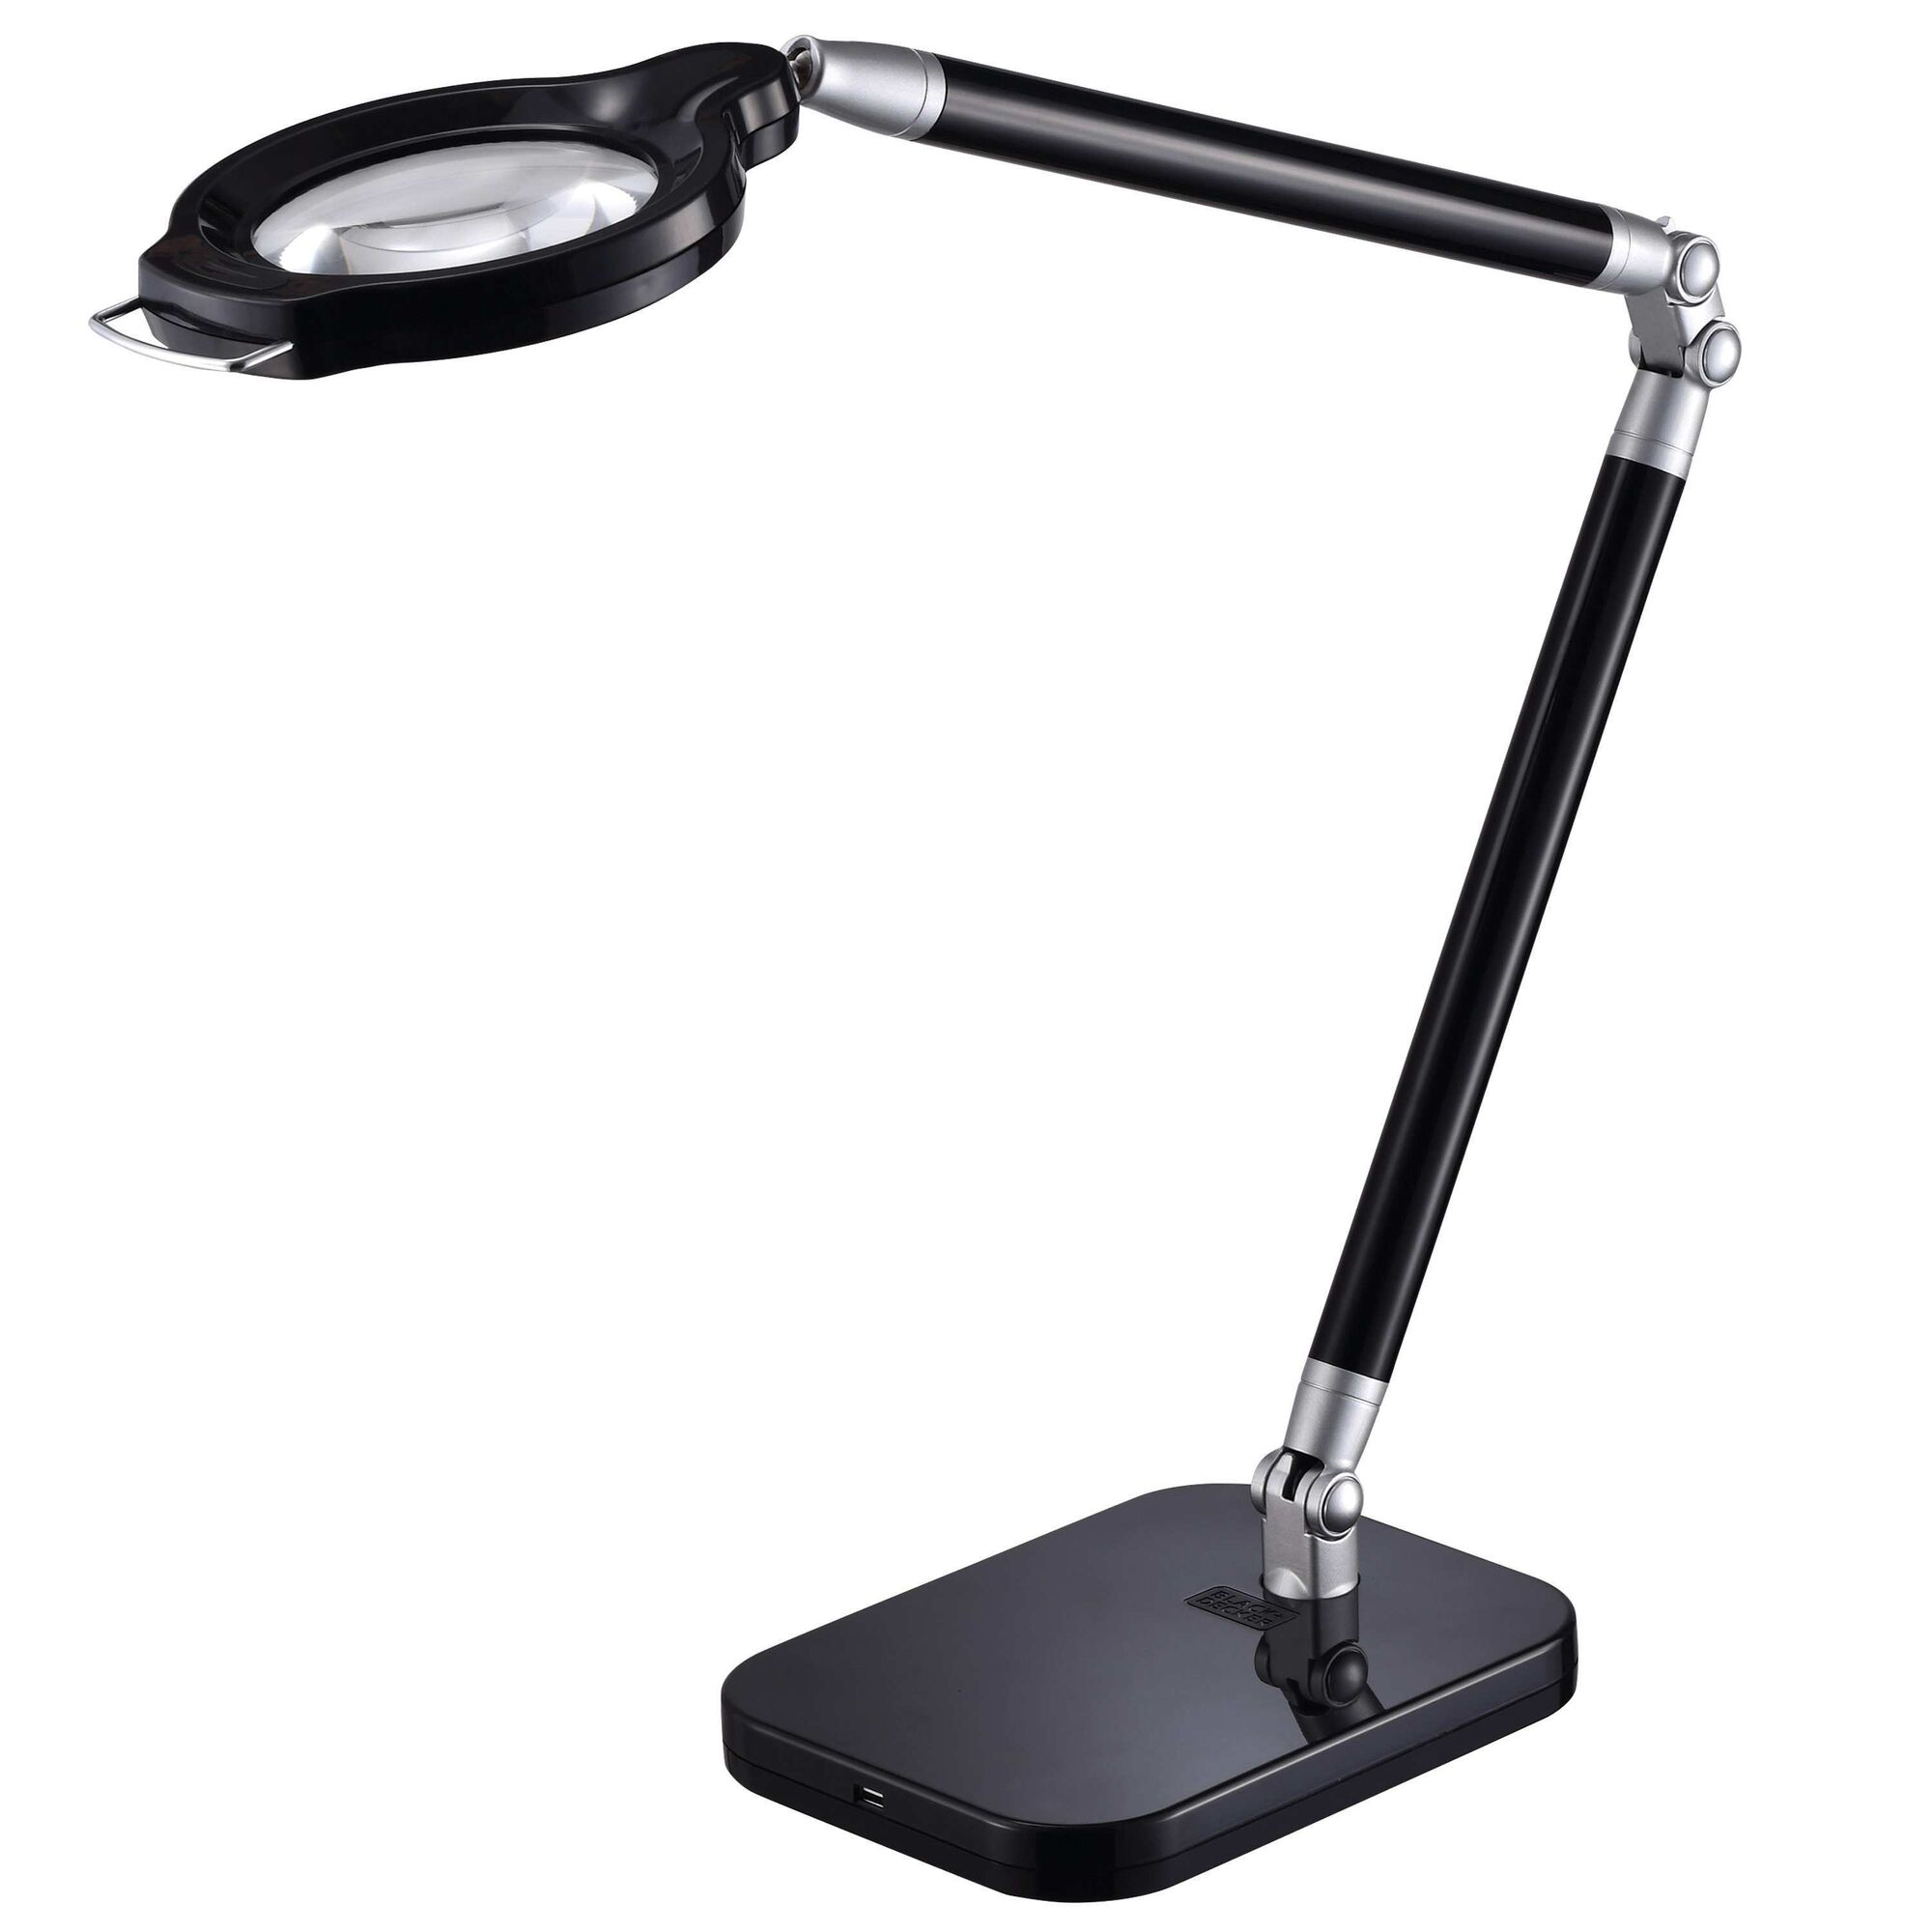 Ultra Reach Magnifier L E D Desk Lamp.